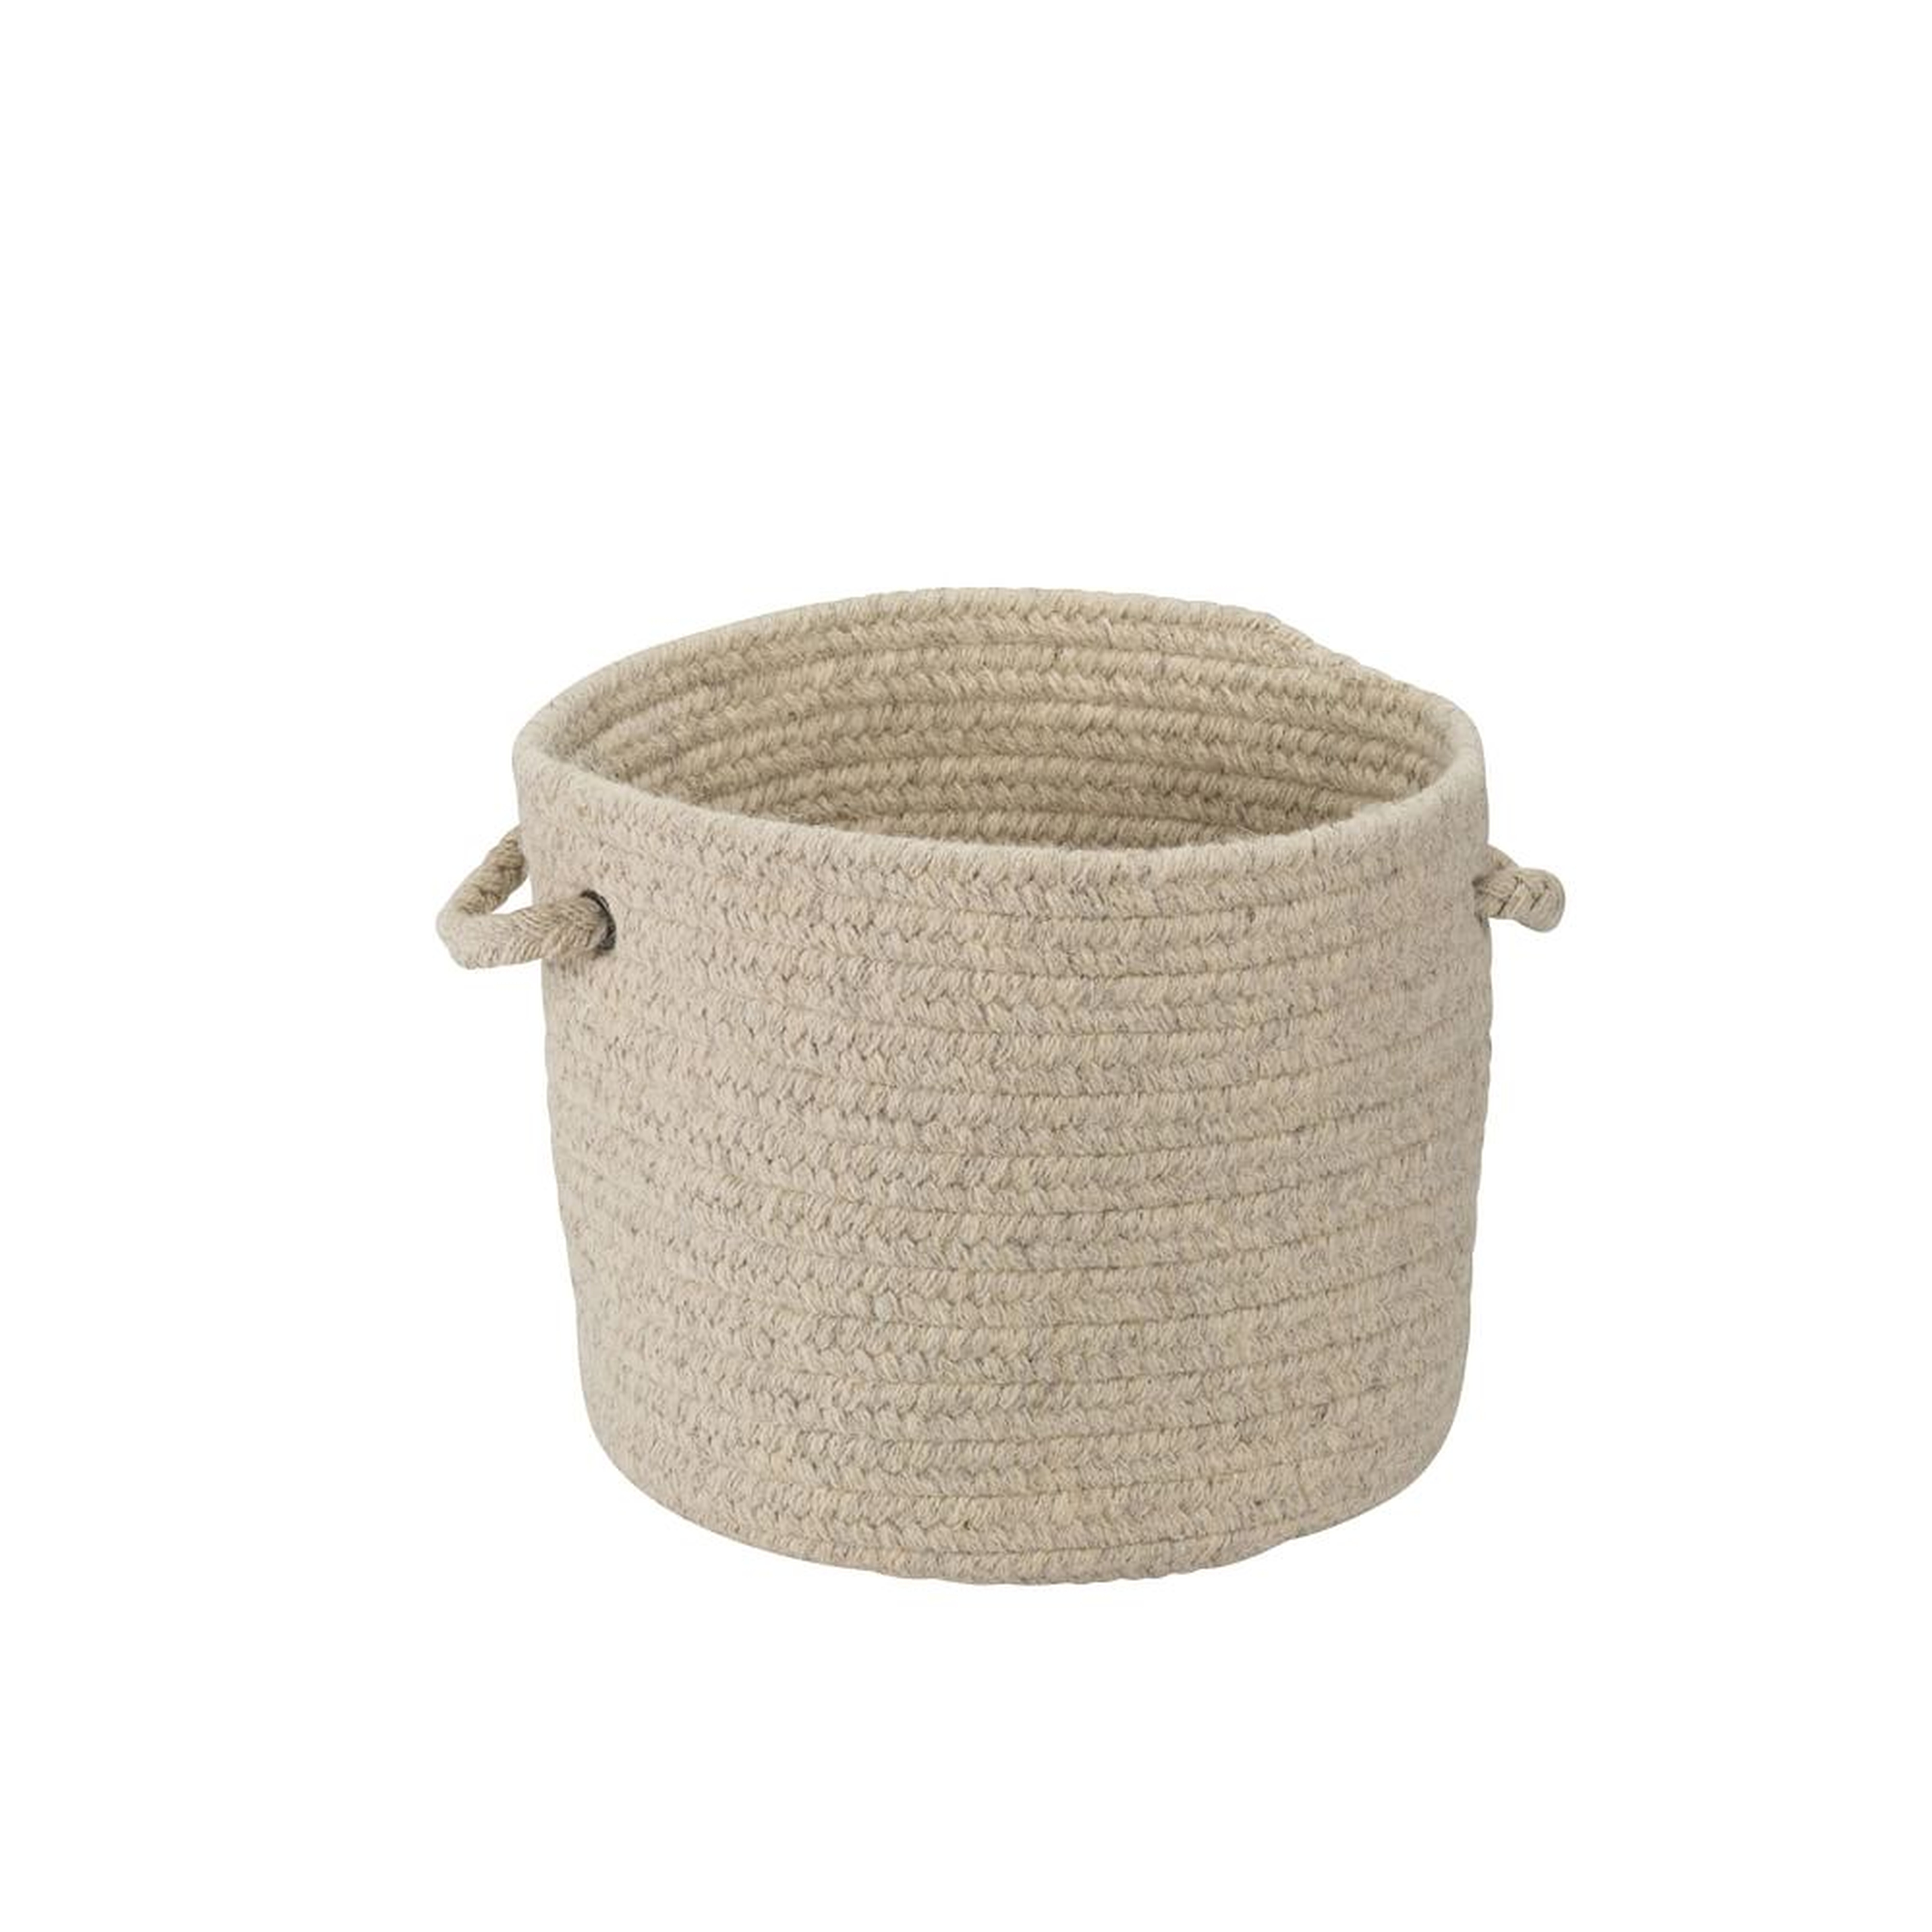 Natural Wool Basket, Light Gray, Small - West Elm